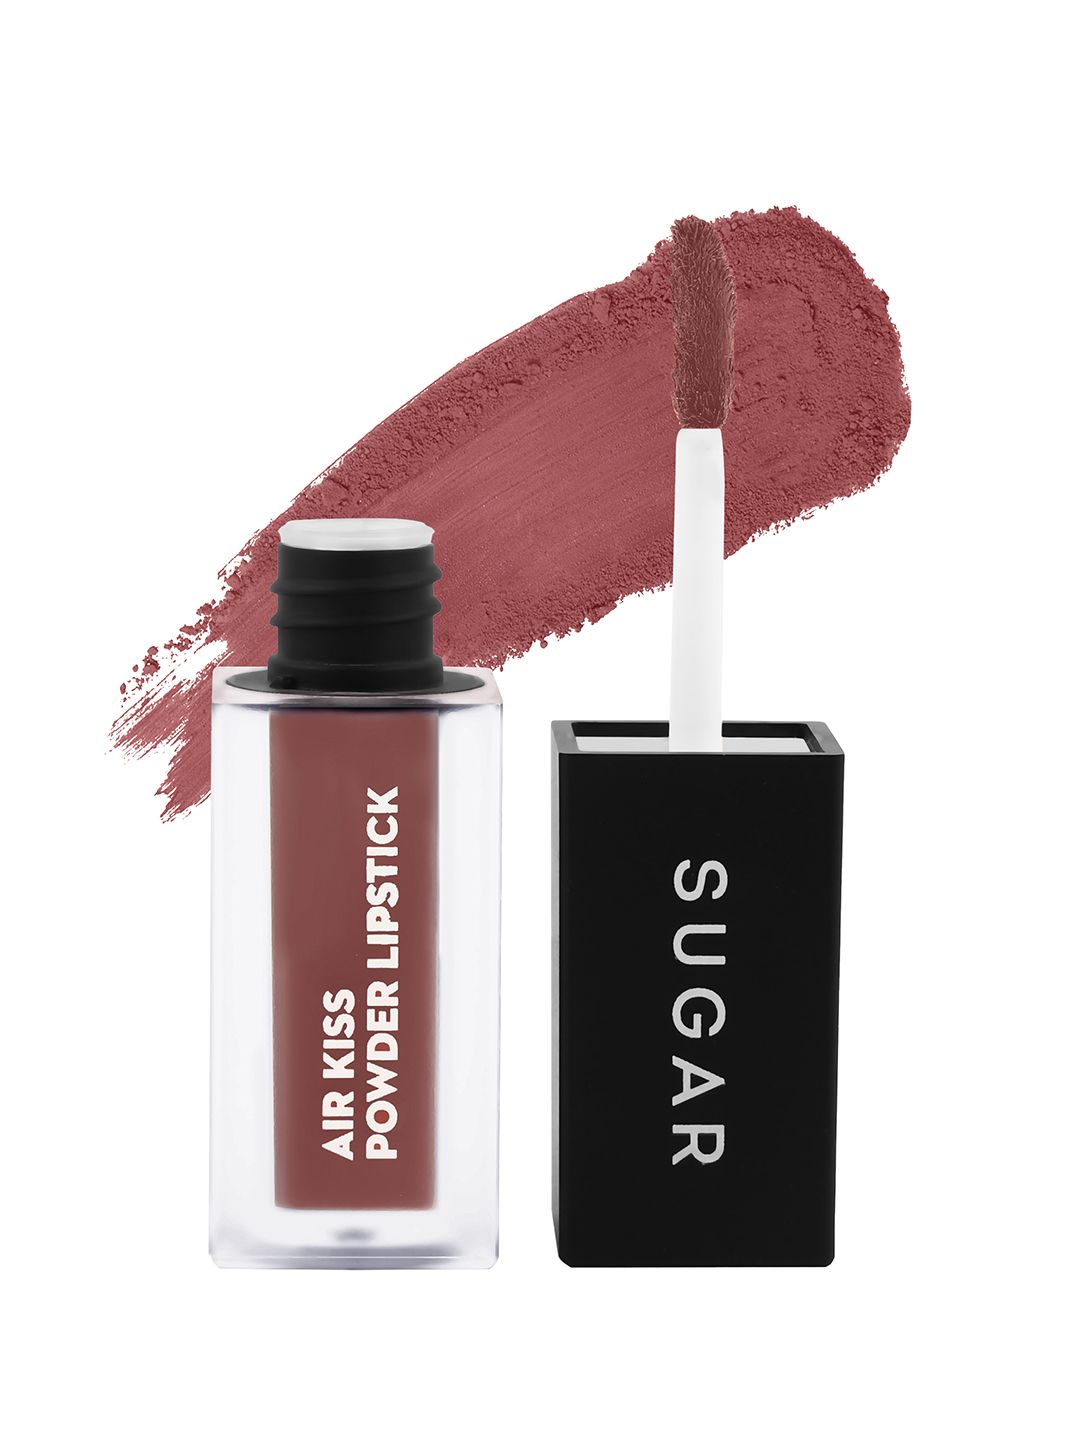 SUGAR Air Kiss Powder Lipstick - Caramel Souffle 03 Price in India